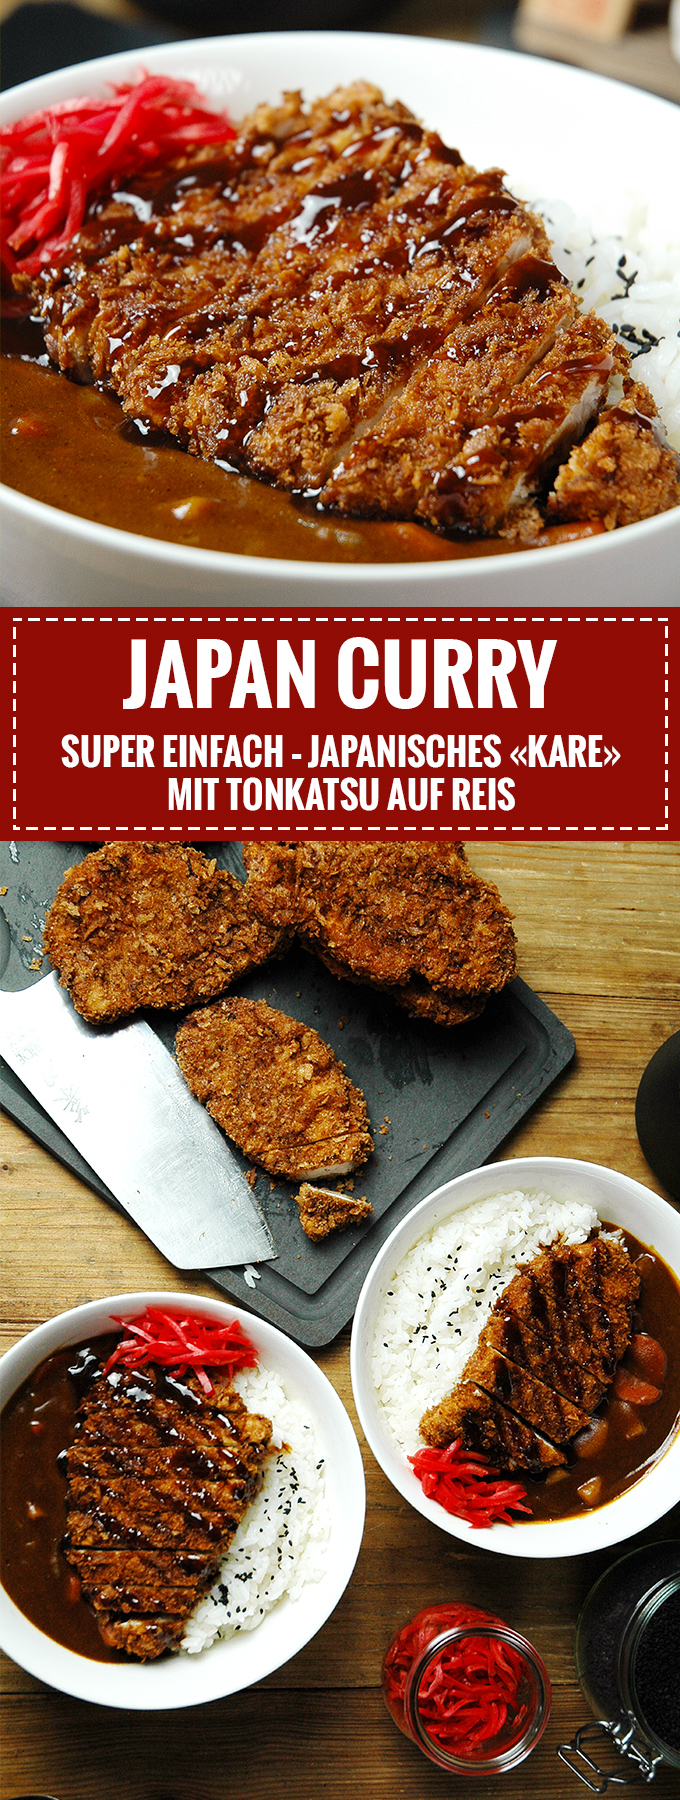 Japanisches Curry "Kare" mit Tonkatsu // Rezept auf Knabberkult.de